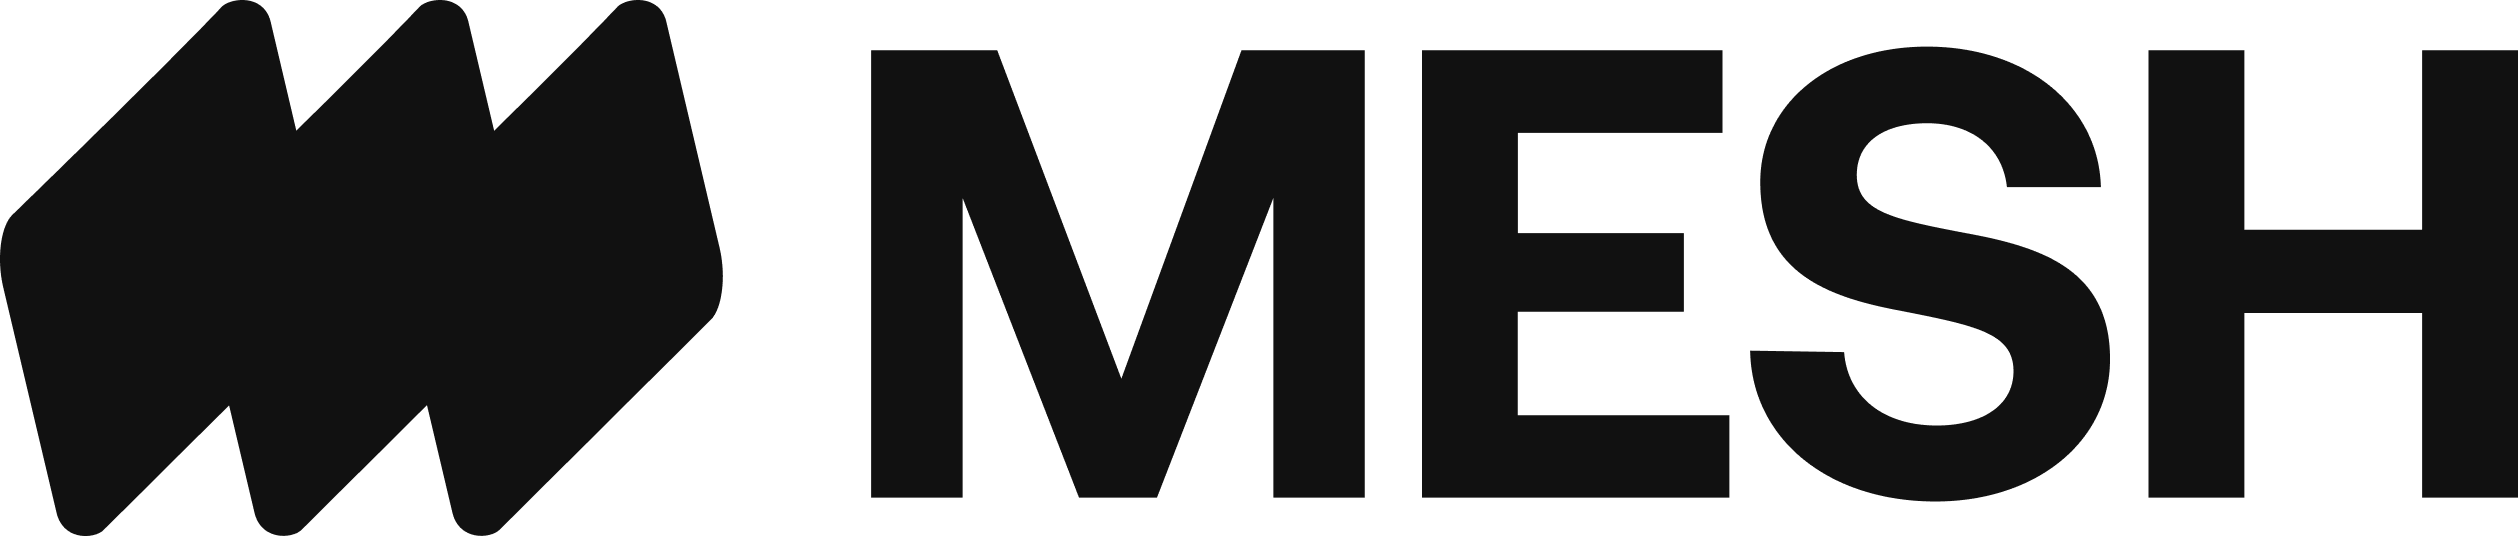 Mesh Payments logo